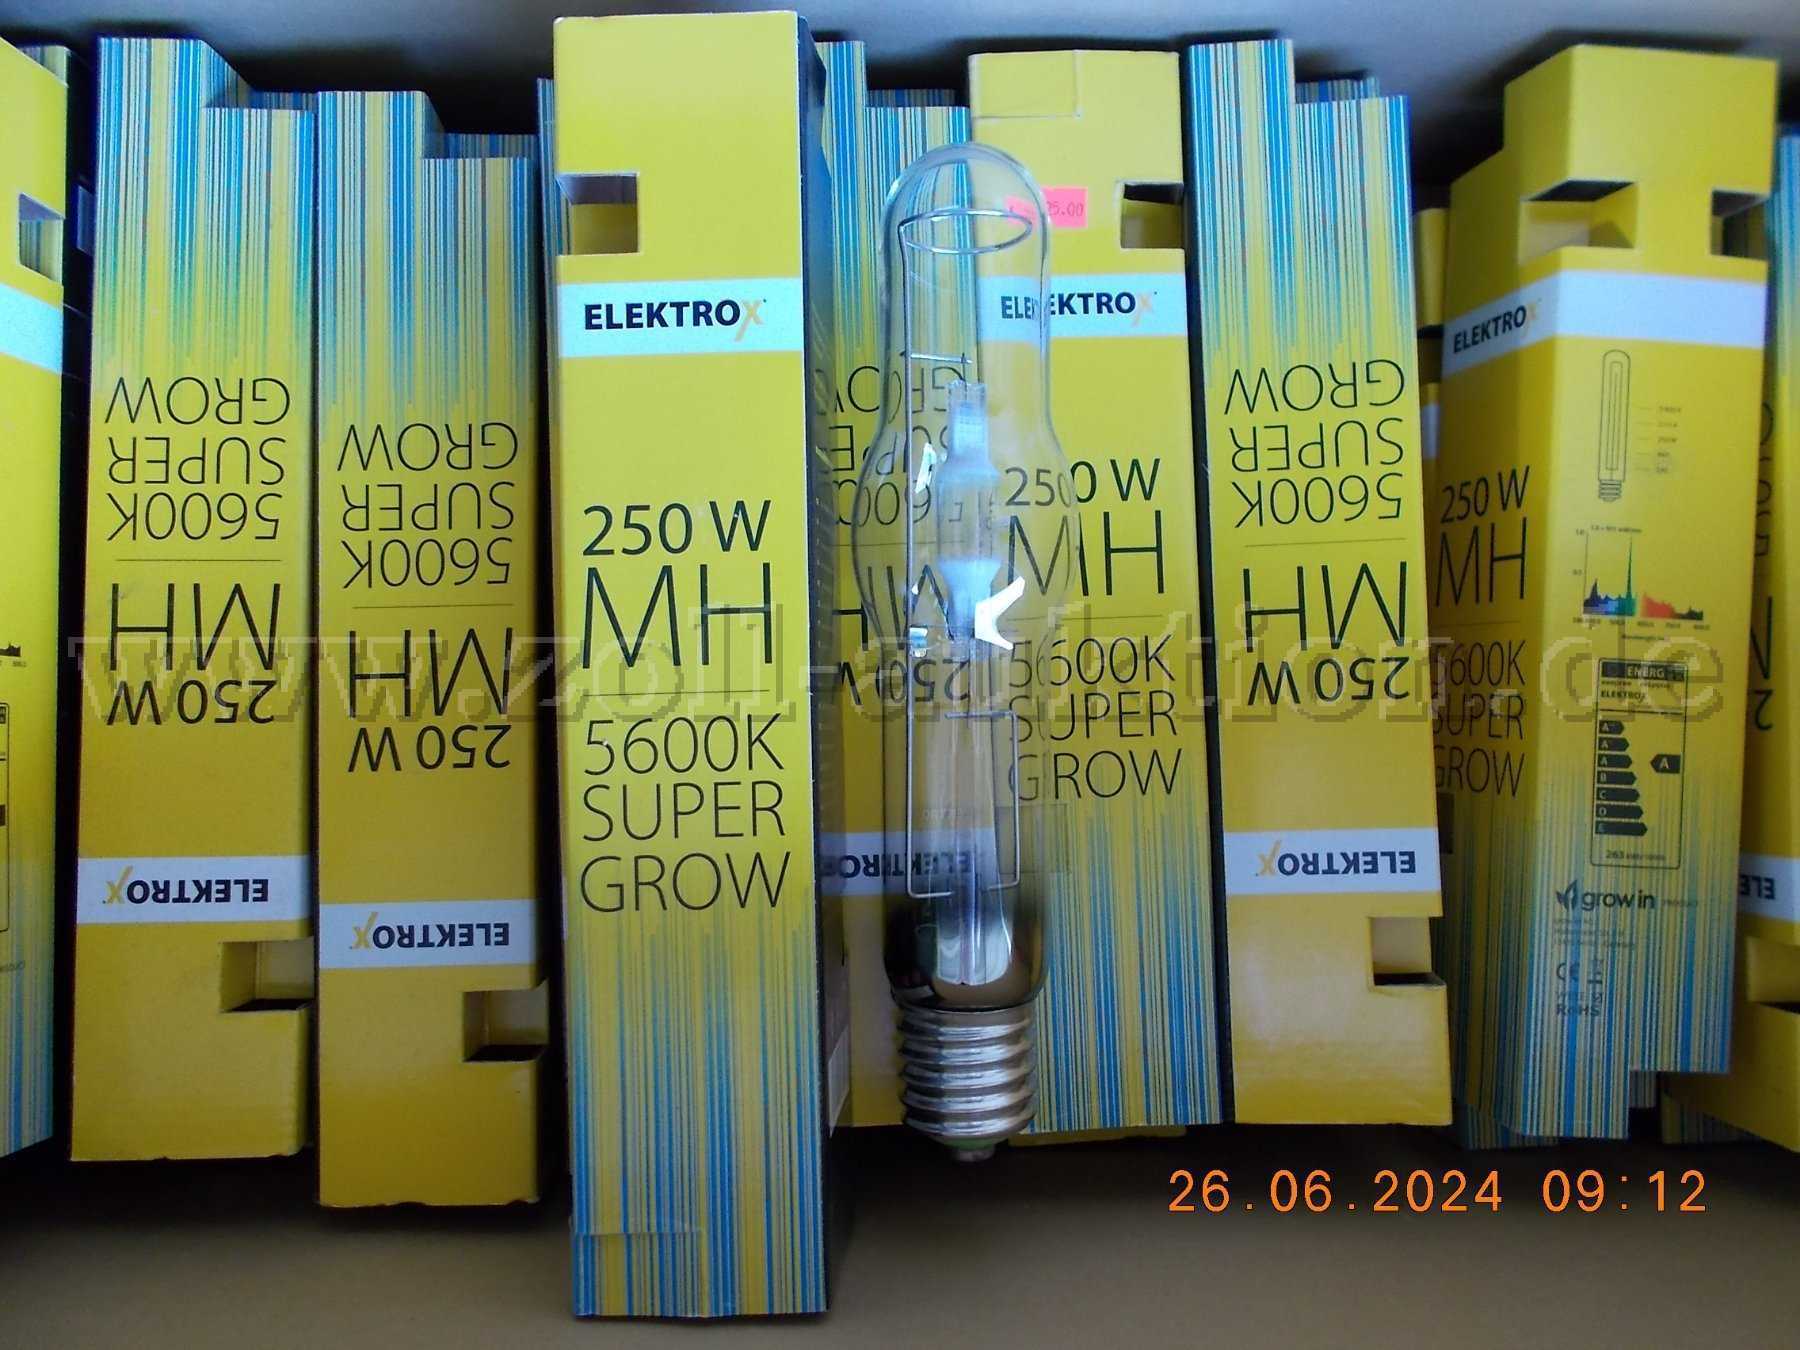 Electrox MH 5600k Super Grow